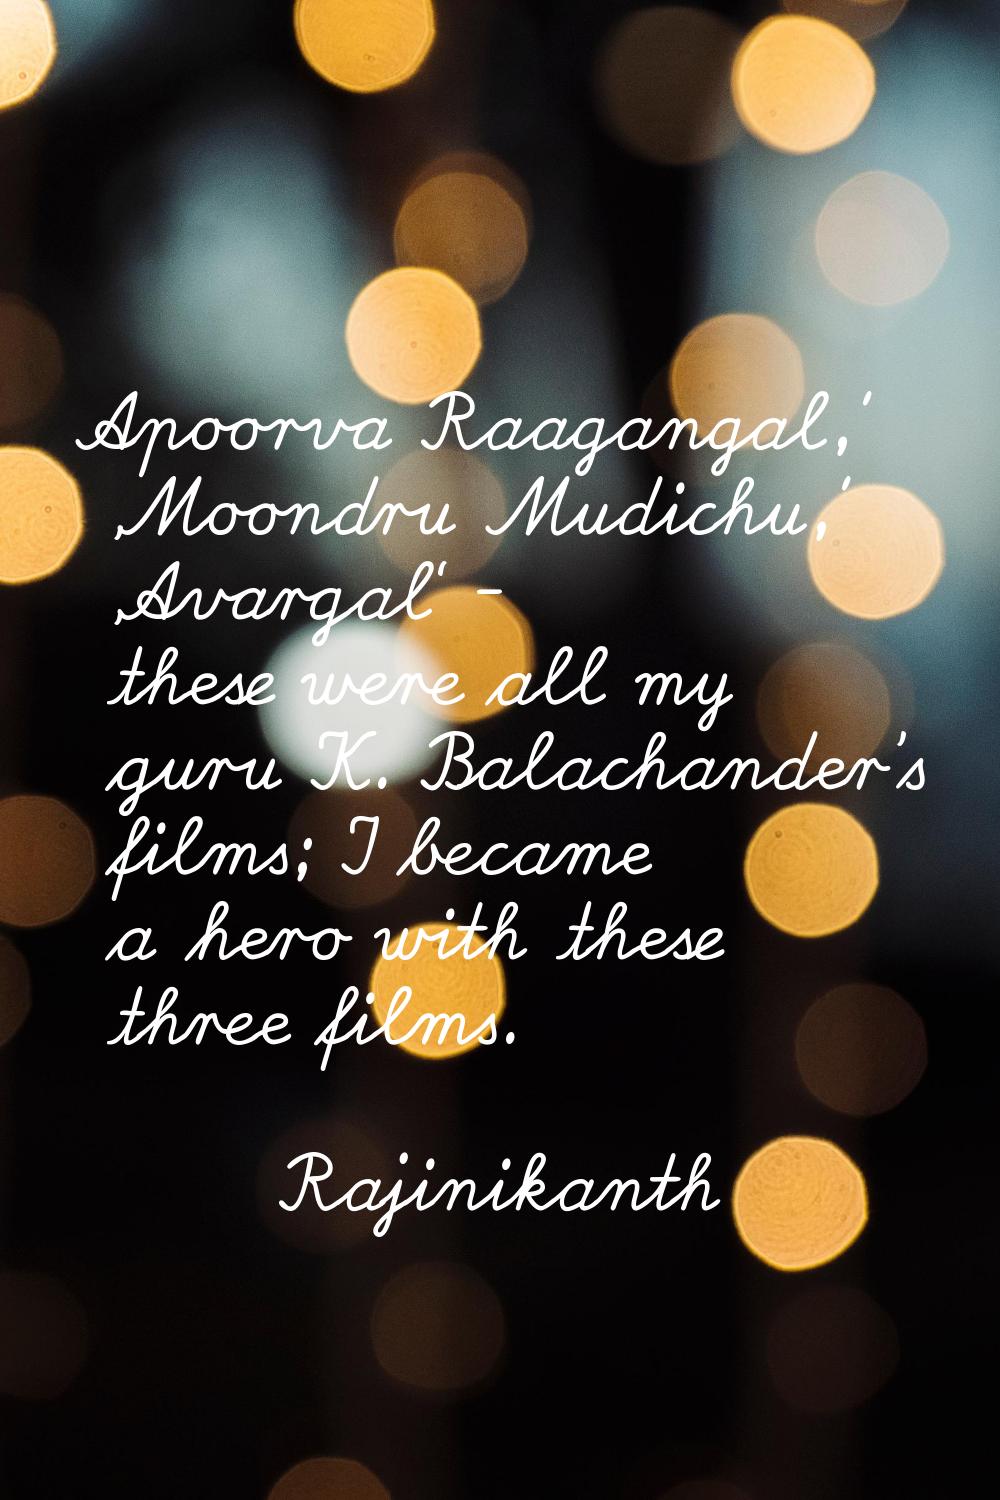 Apoorva Raagangal,' 'Moondru Mudichu,' 'Avargal' - these were all my guru K. Balachander's films; I